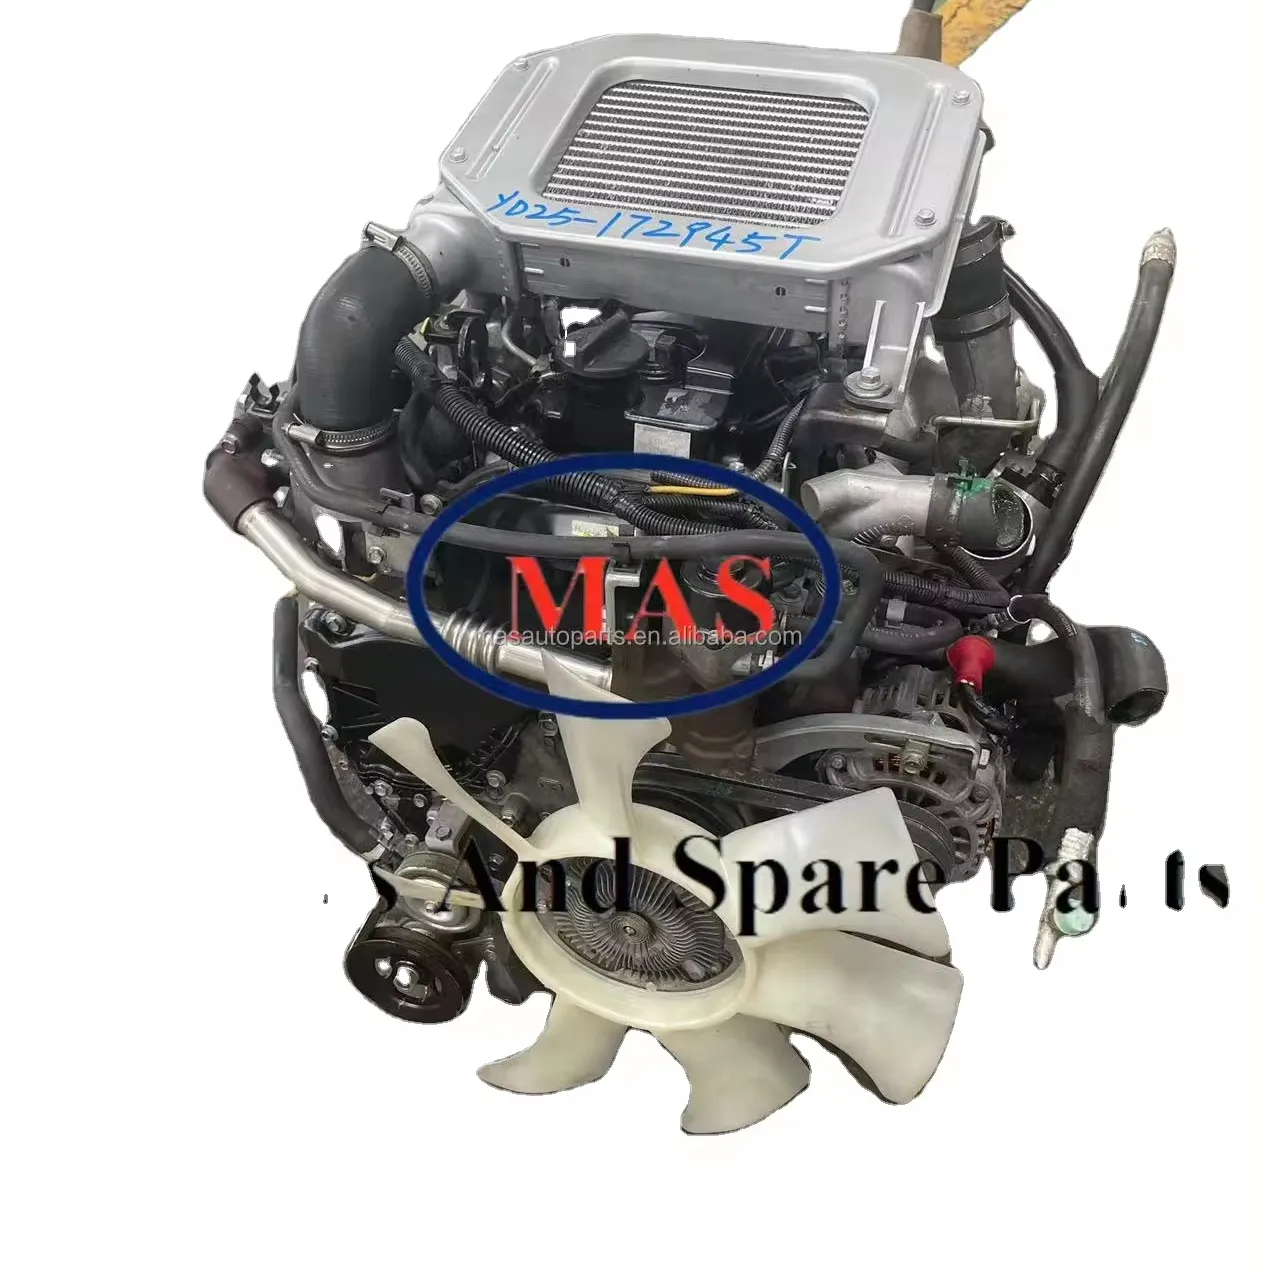 Hot Sale 4 Cylinder 2.5L NAVARA D22 Pickup Turbo Diesel Engine YD25 YD25DDTi Motor With 2WD Transmission